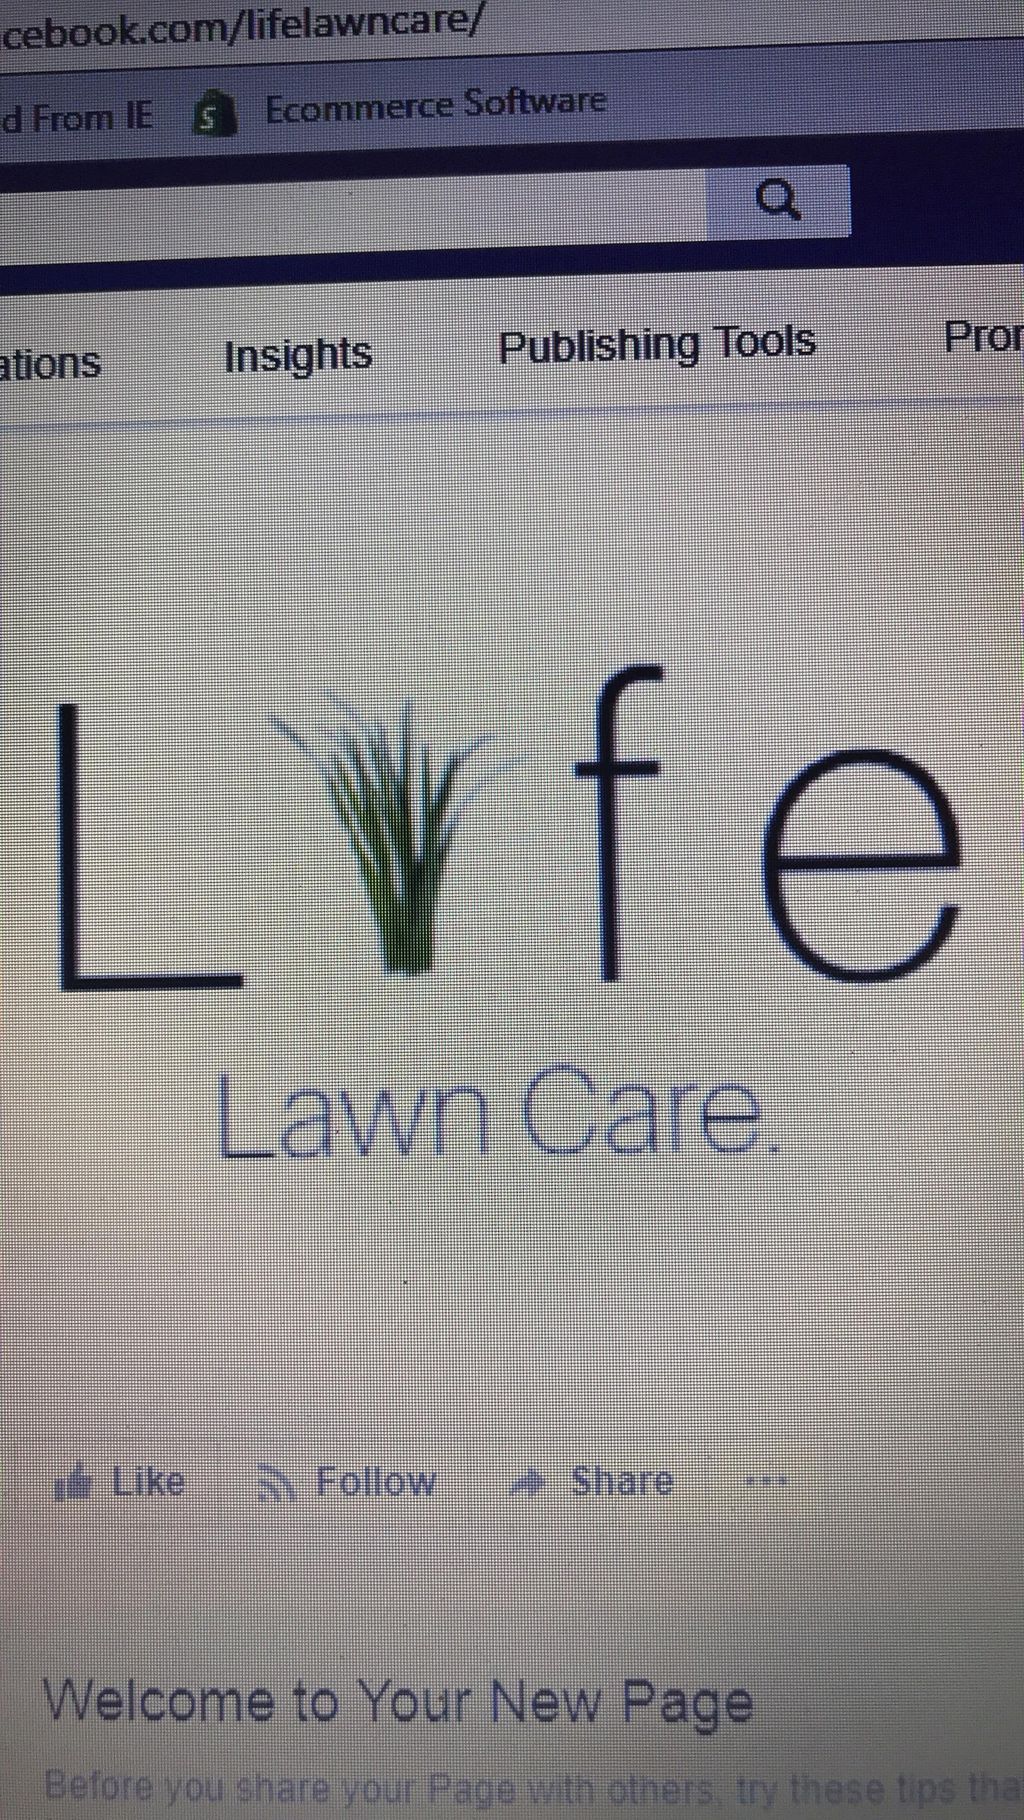 Life Lawn Care